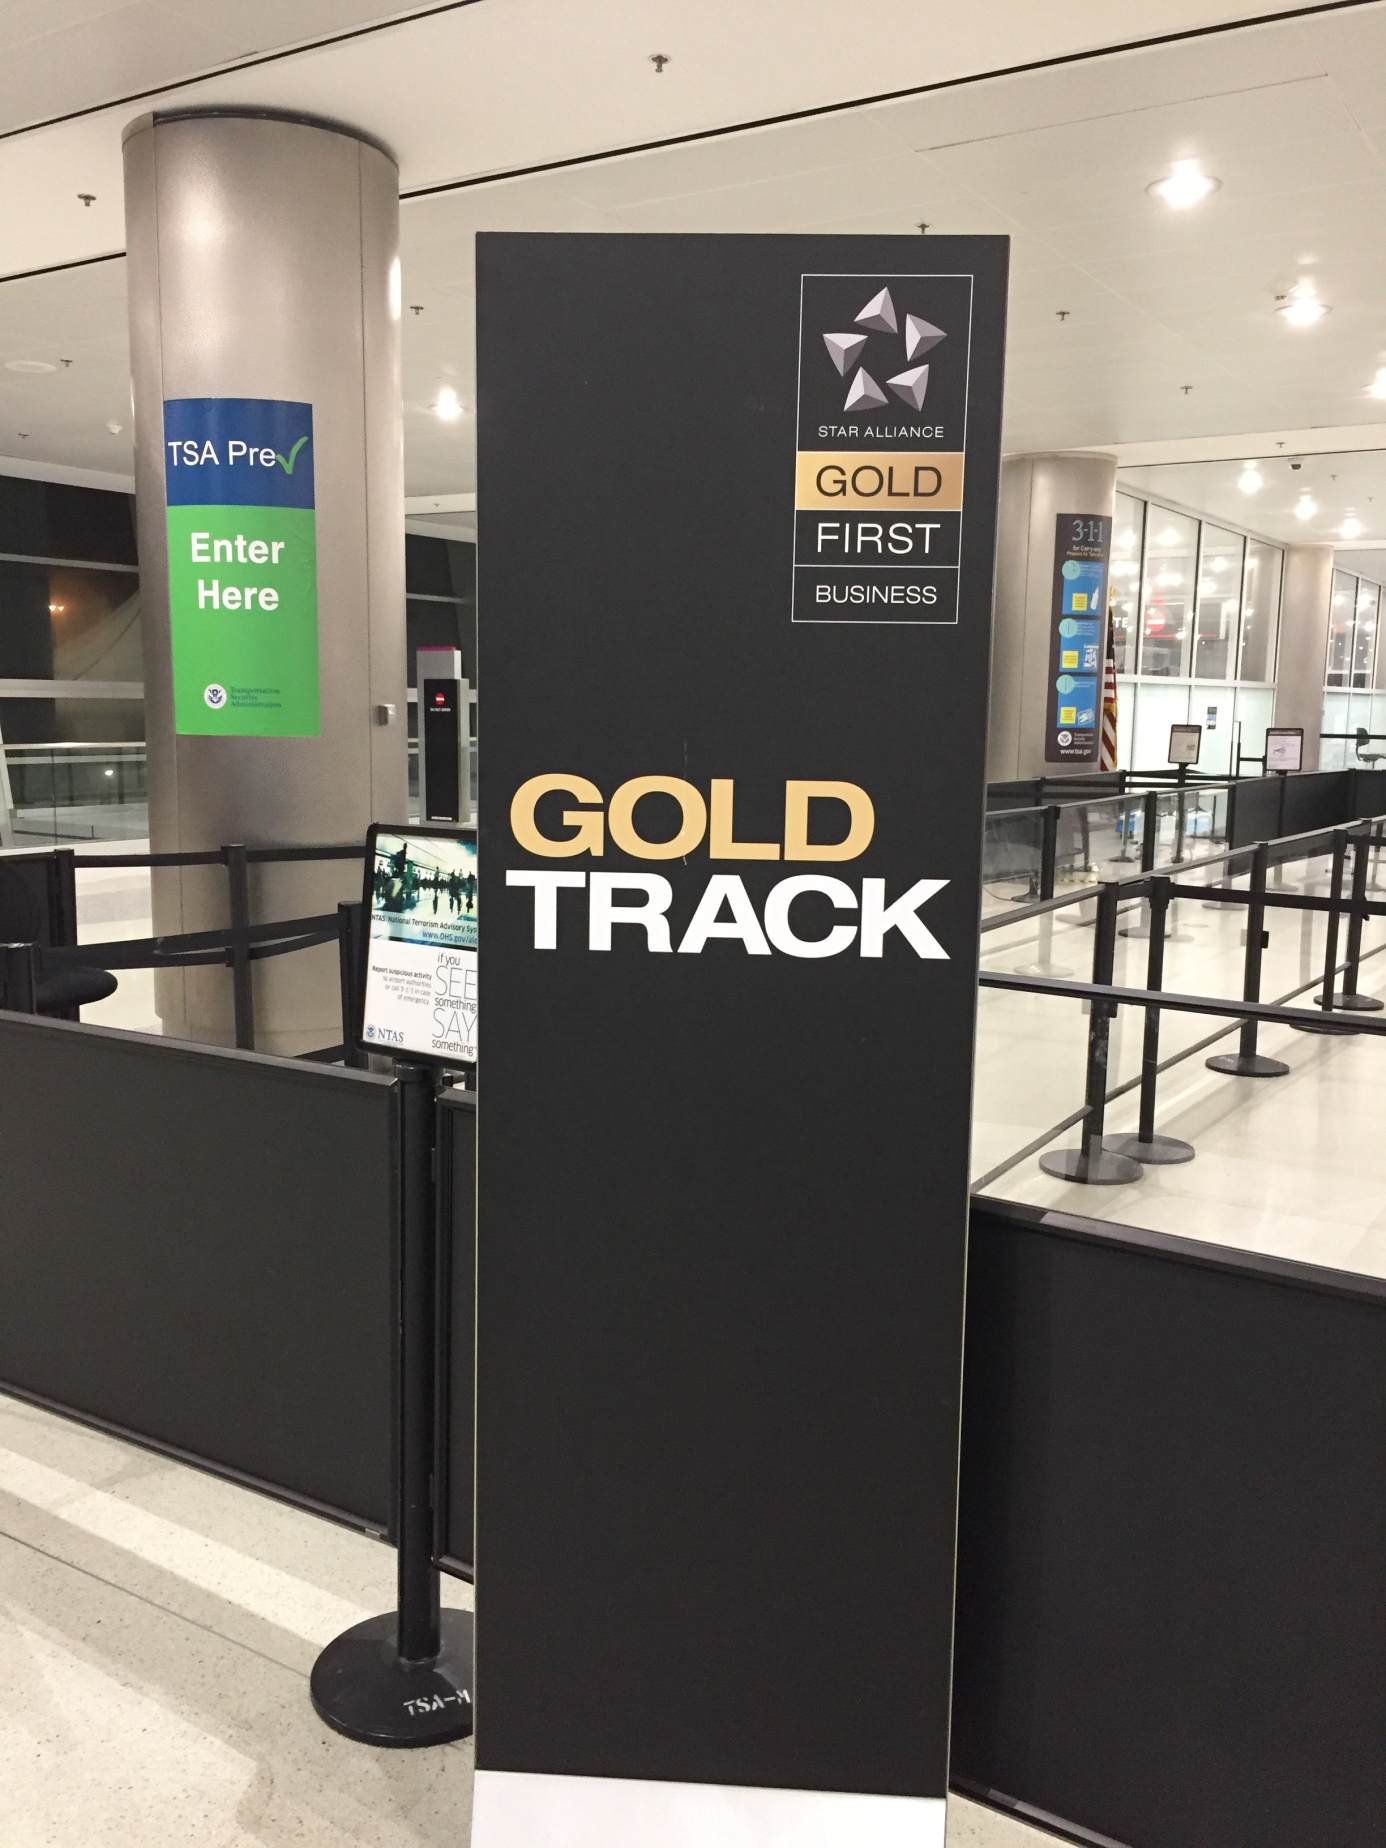 Star Alliance Gold Track